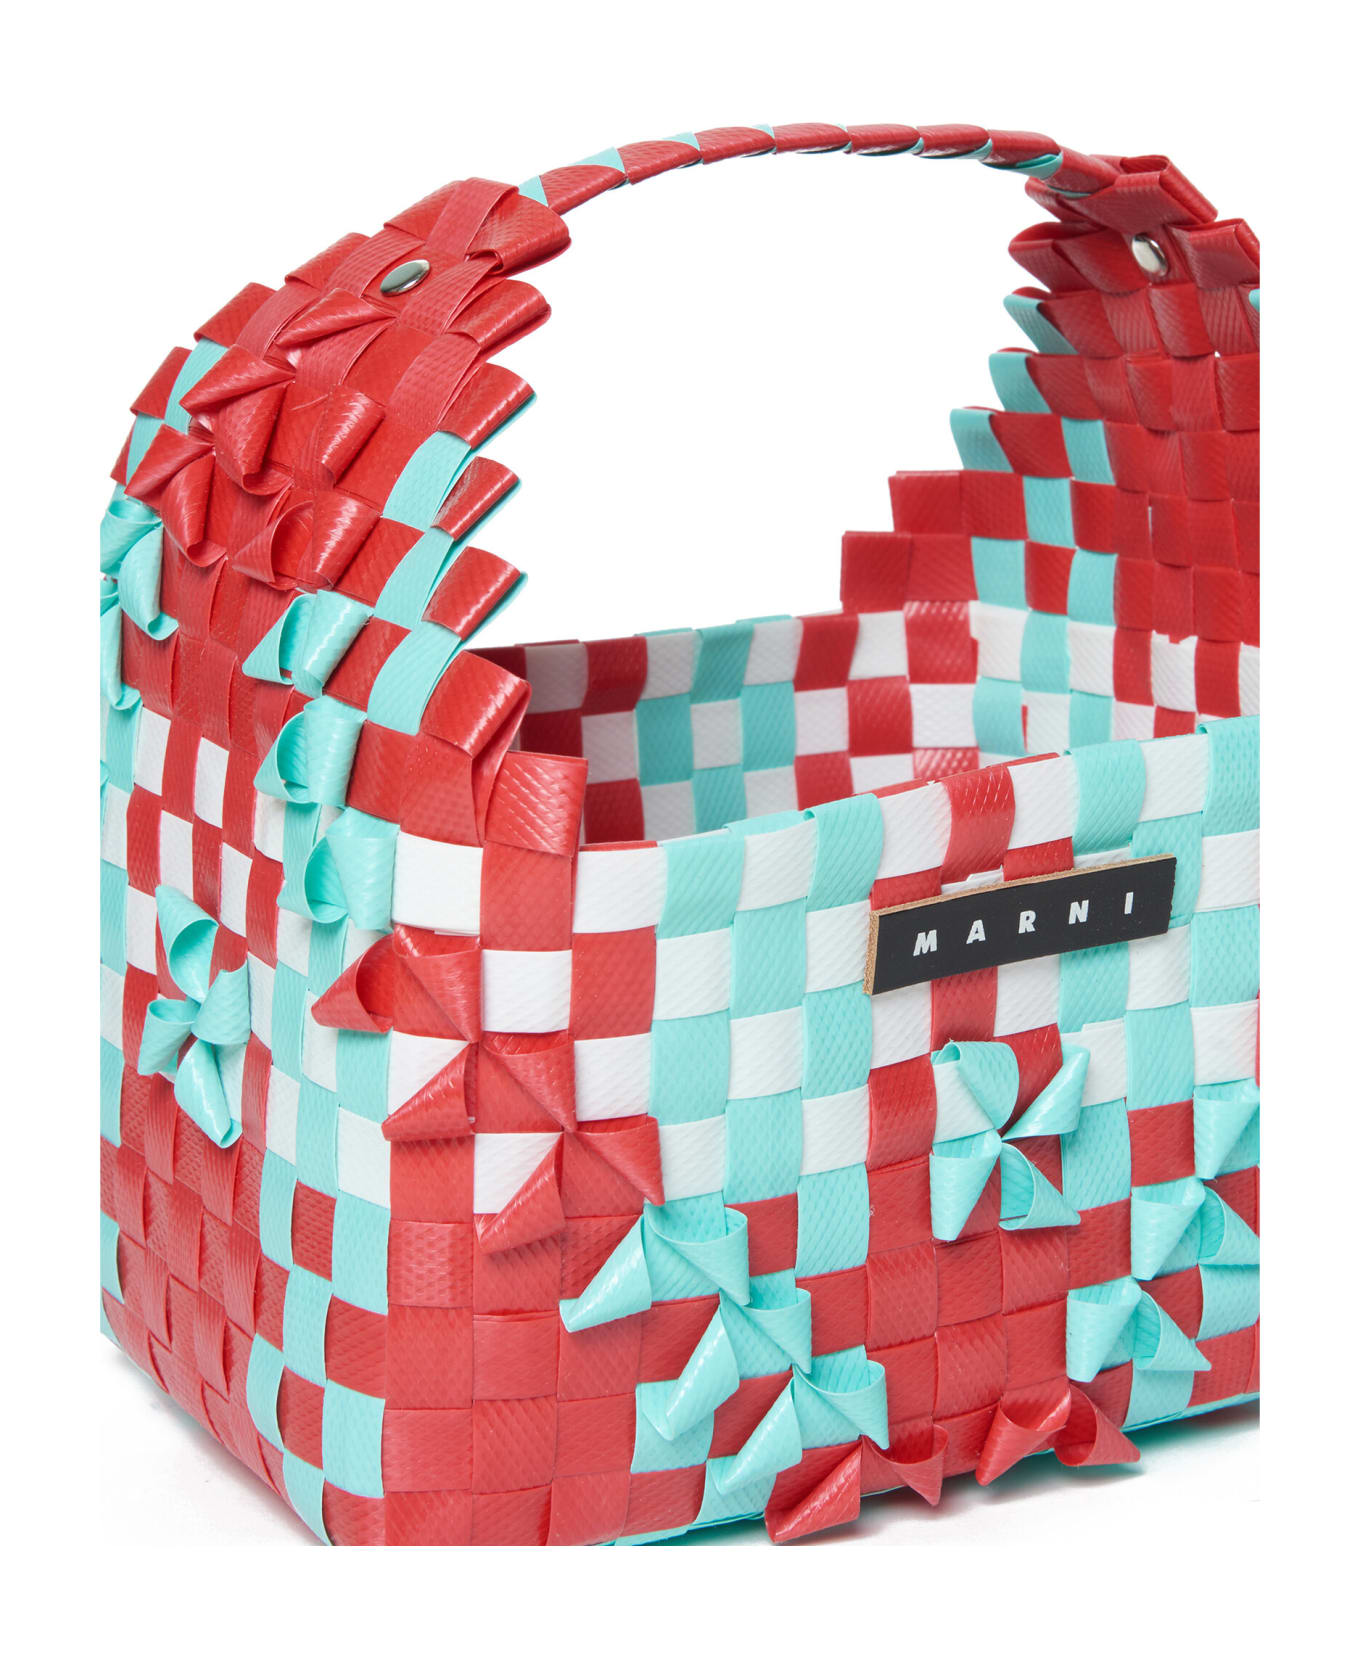 Marni Mw80f Rainbow Bag Bags Marni Red Woven Rainbow Bag With Single Handle And Applied Logo - Ibiscus